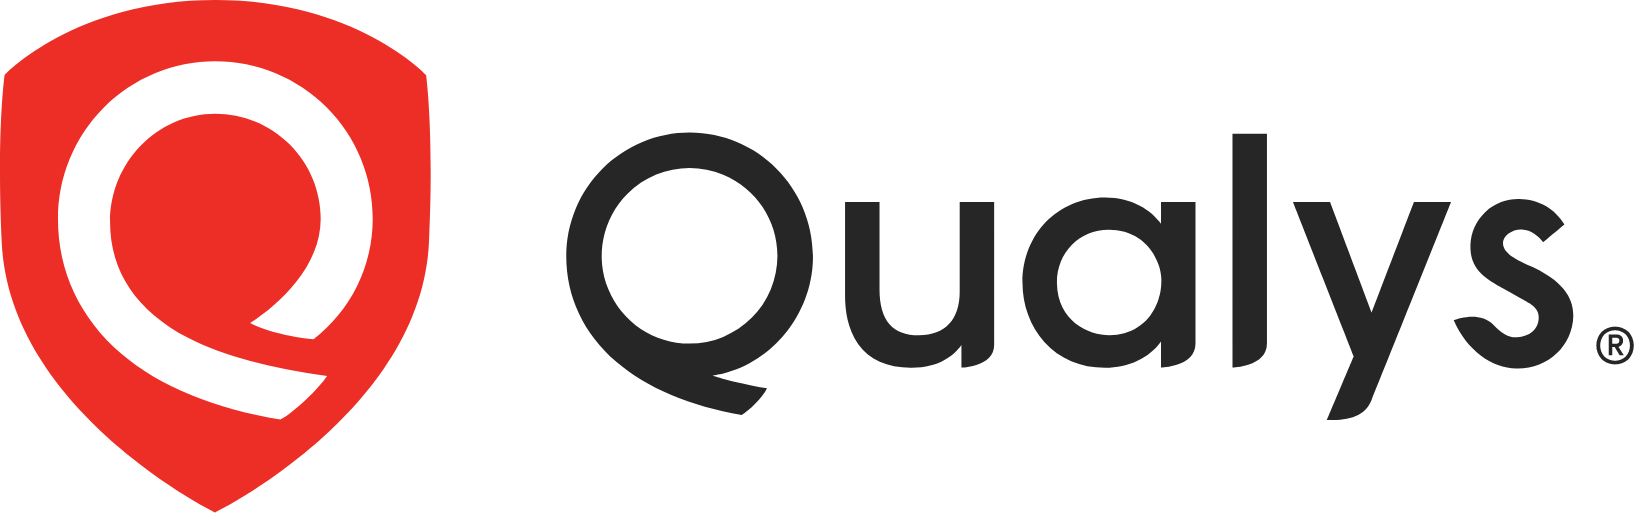 Qualys logo large (transparent PNG)